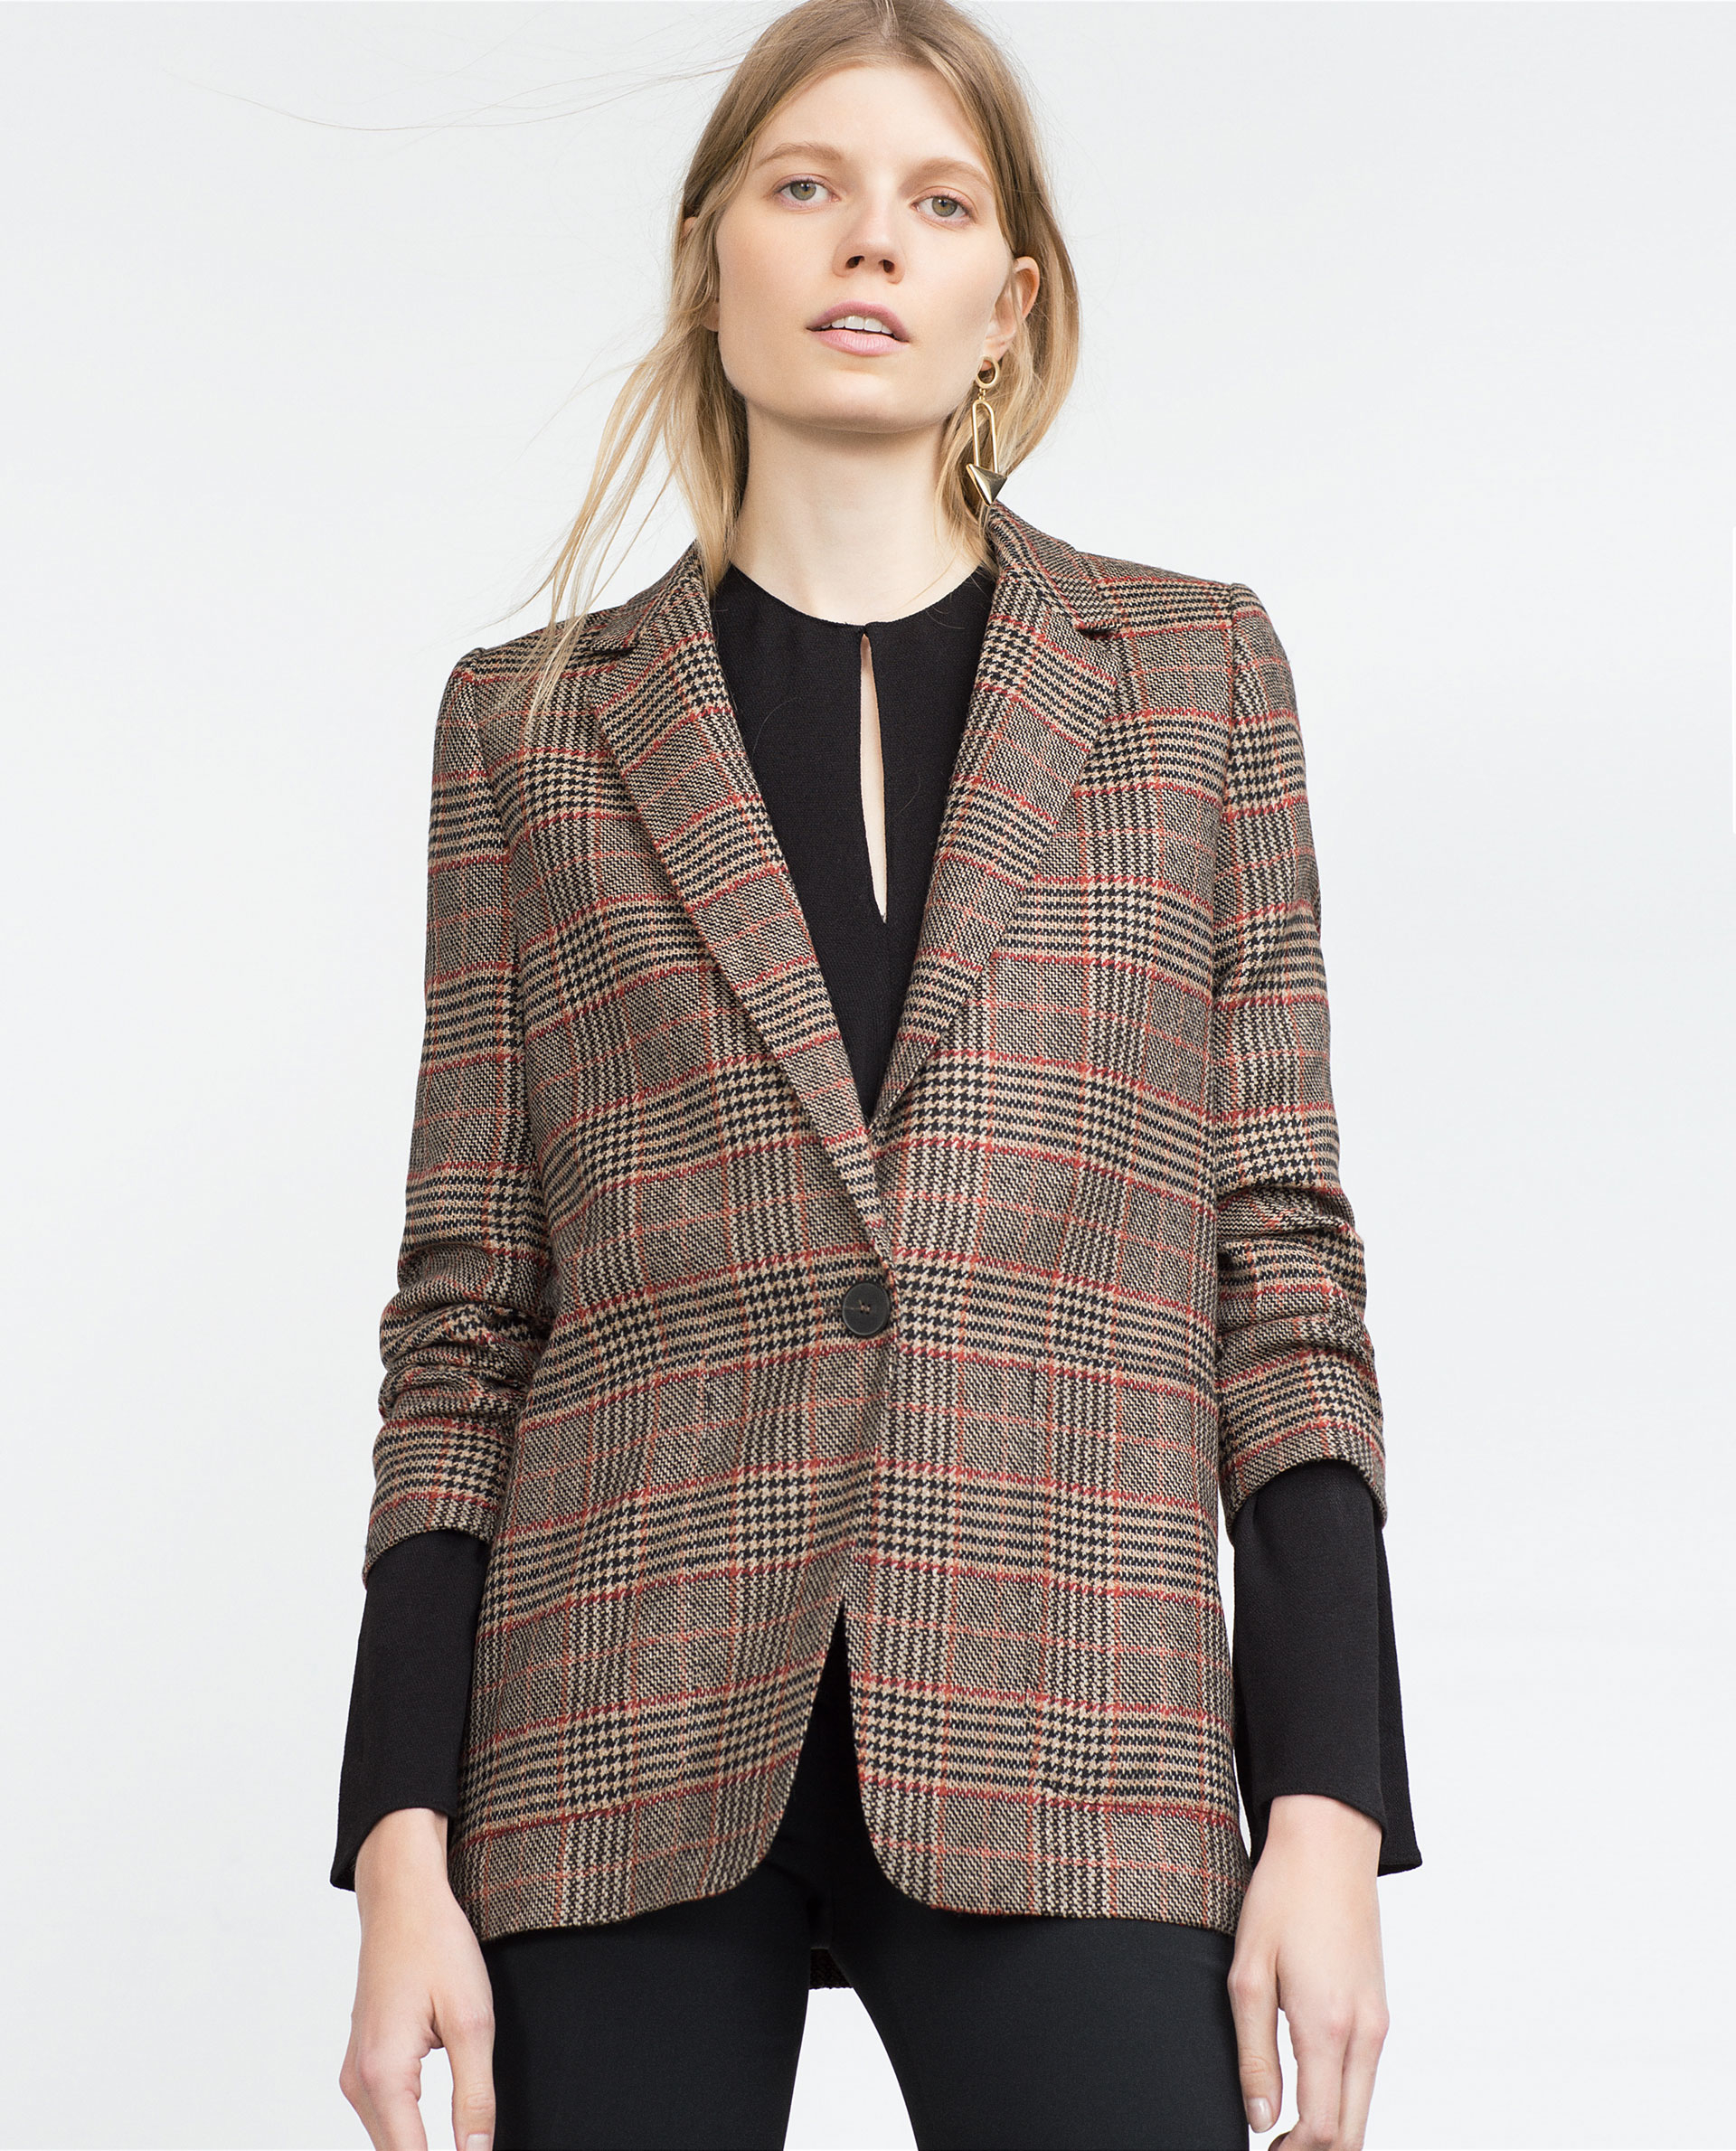 Zara Check Jacket in Brown | Lyst